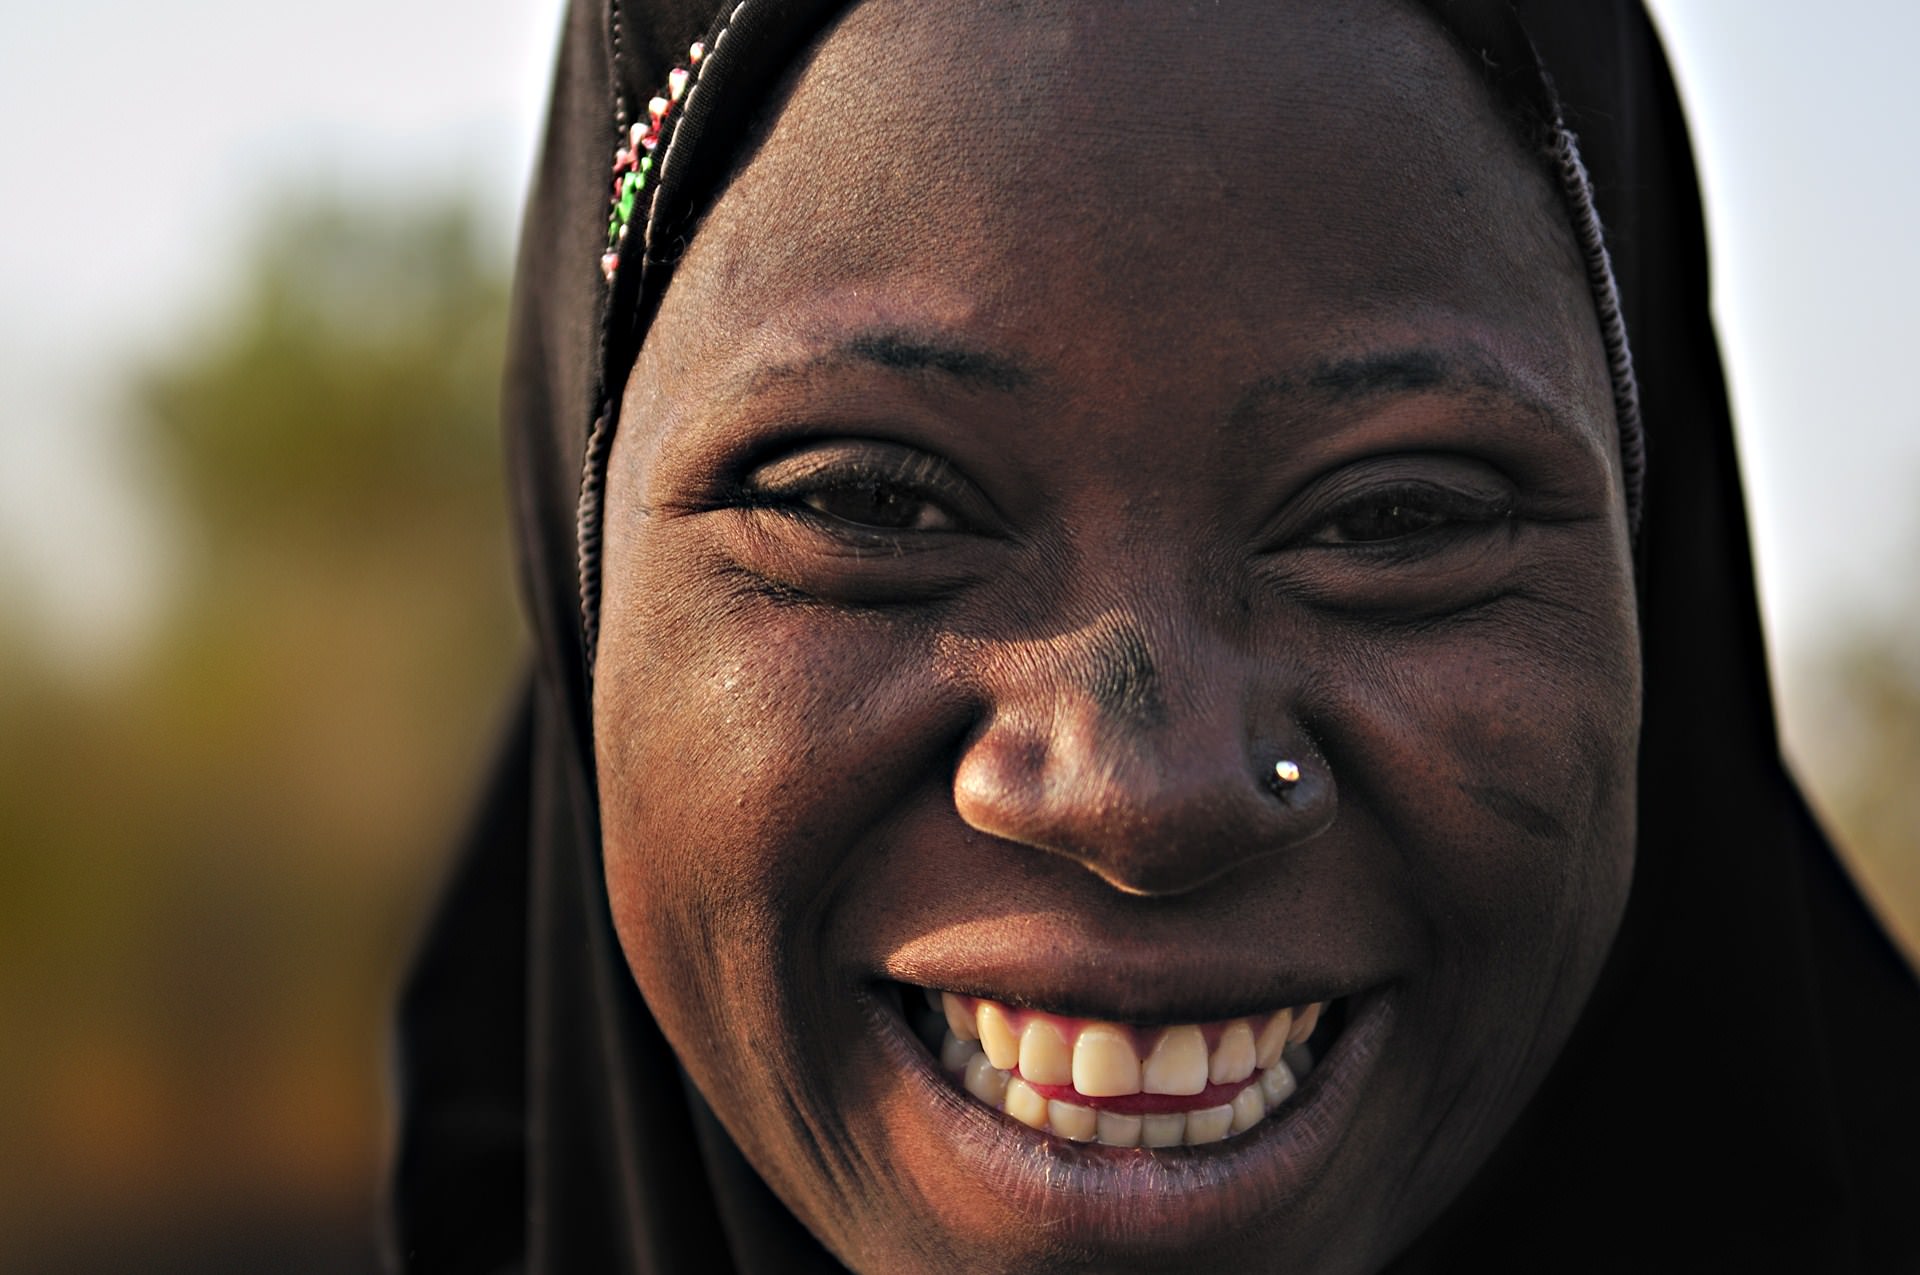 Burkina Faso Afrik'Smile